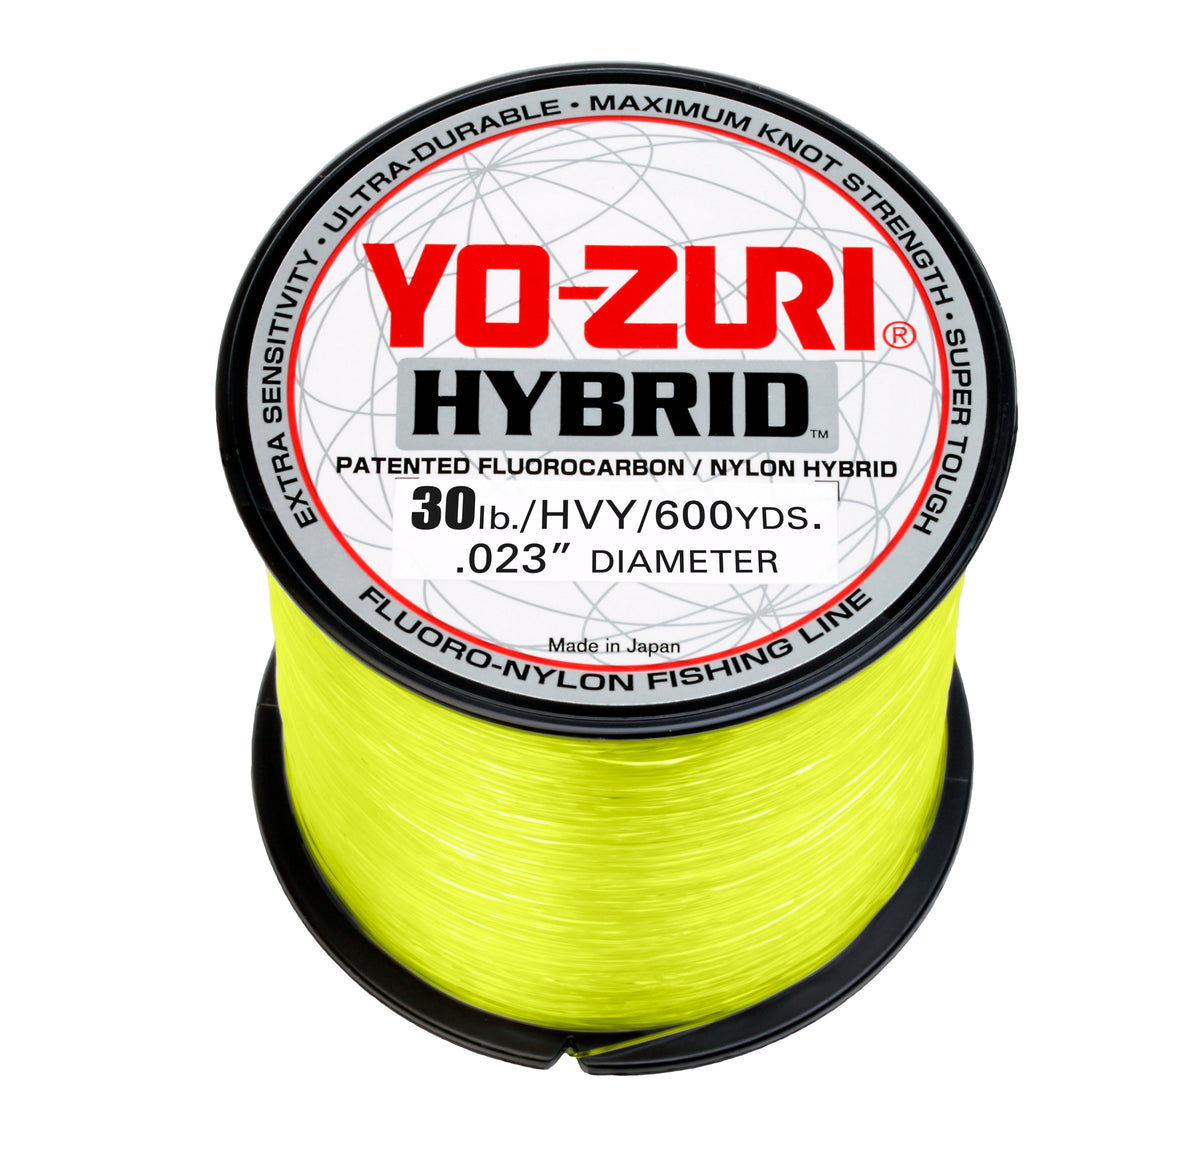 Yo-Zuri 275-Yard Hybrid Monofilament Fishing Line, Clear, 12-Pound